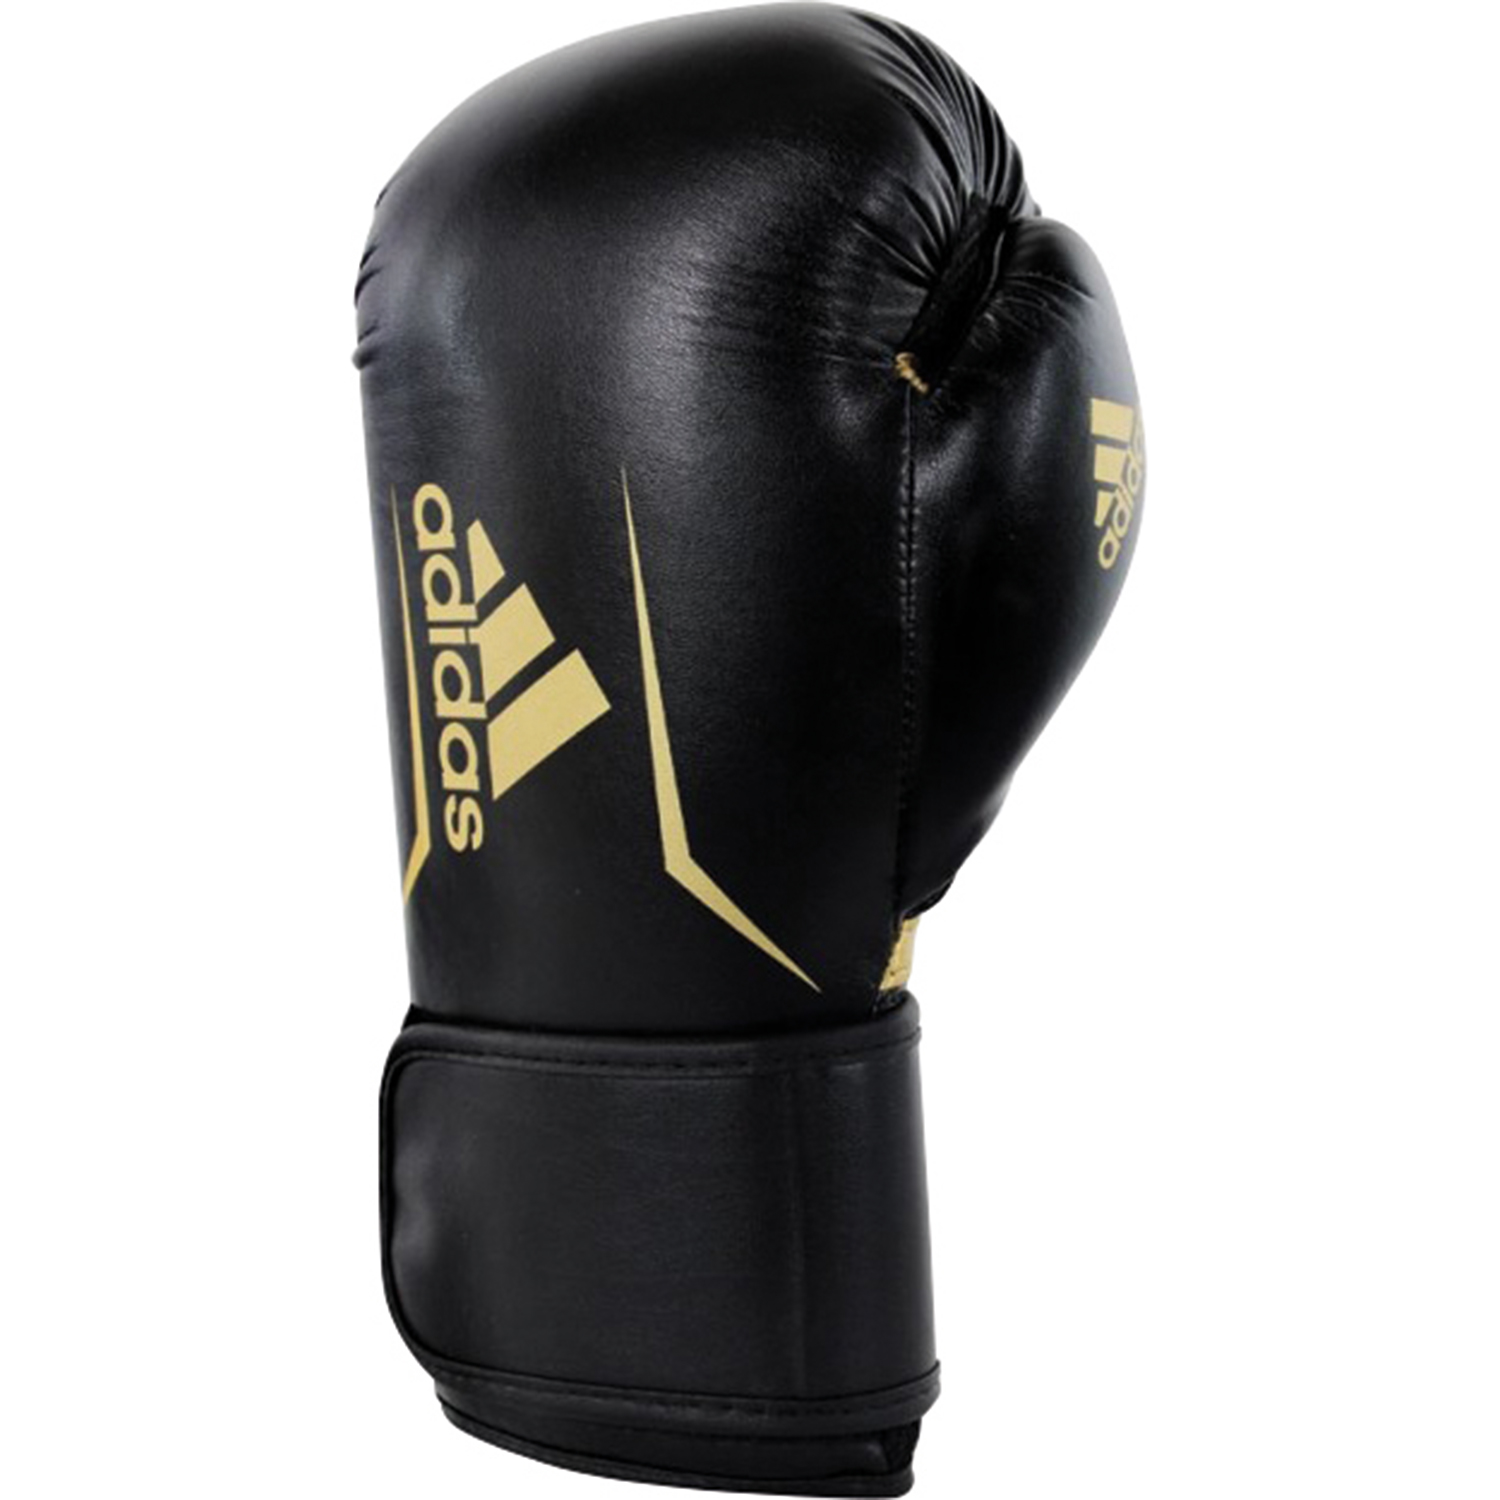 Adidas Speed 100 boxing gloves black/gold 14 oz